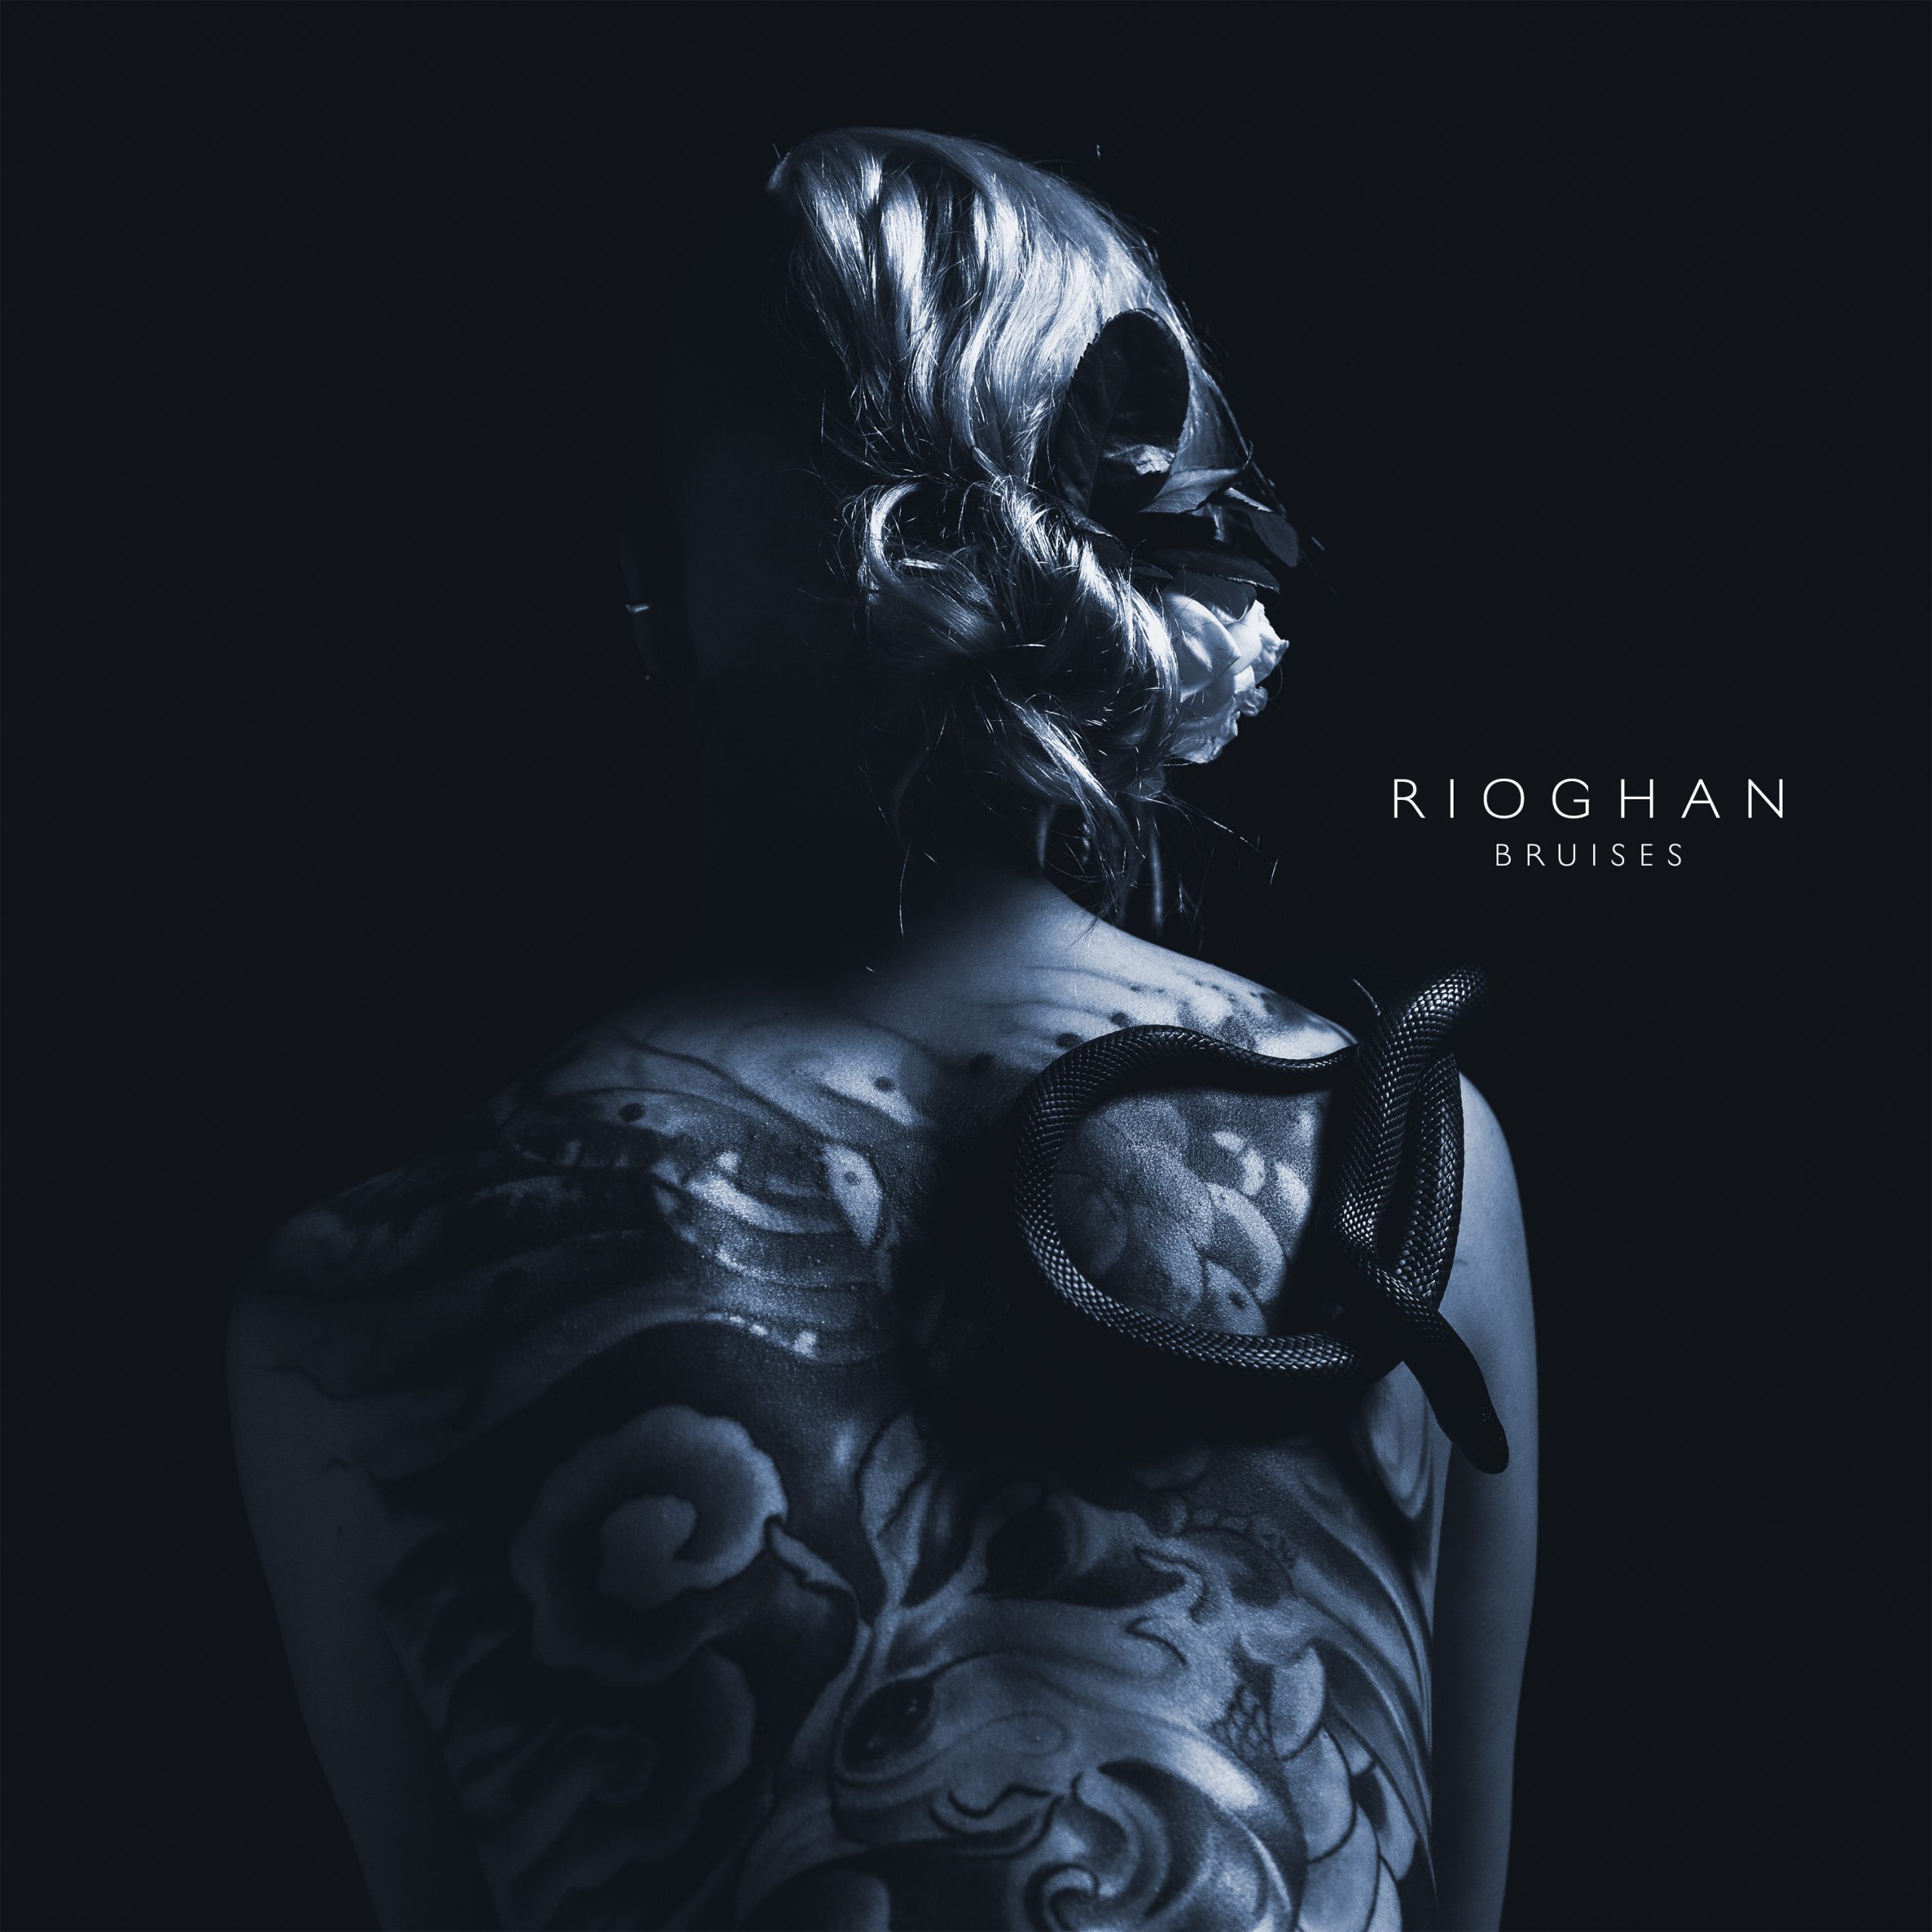 rioghan-neues-musikvideo-zu-bruises-online